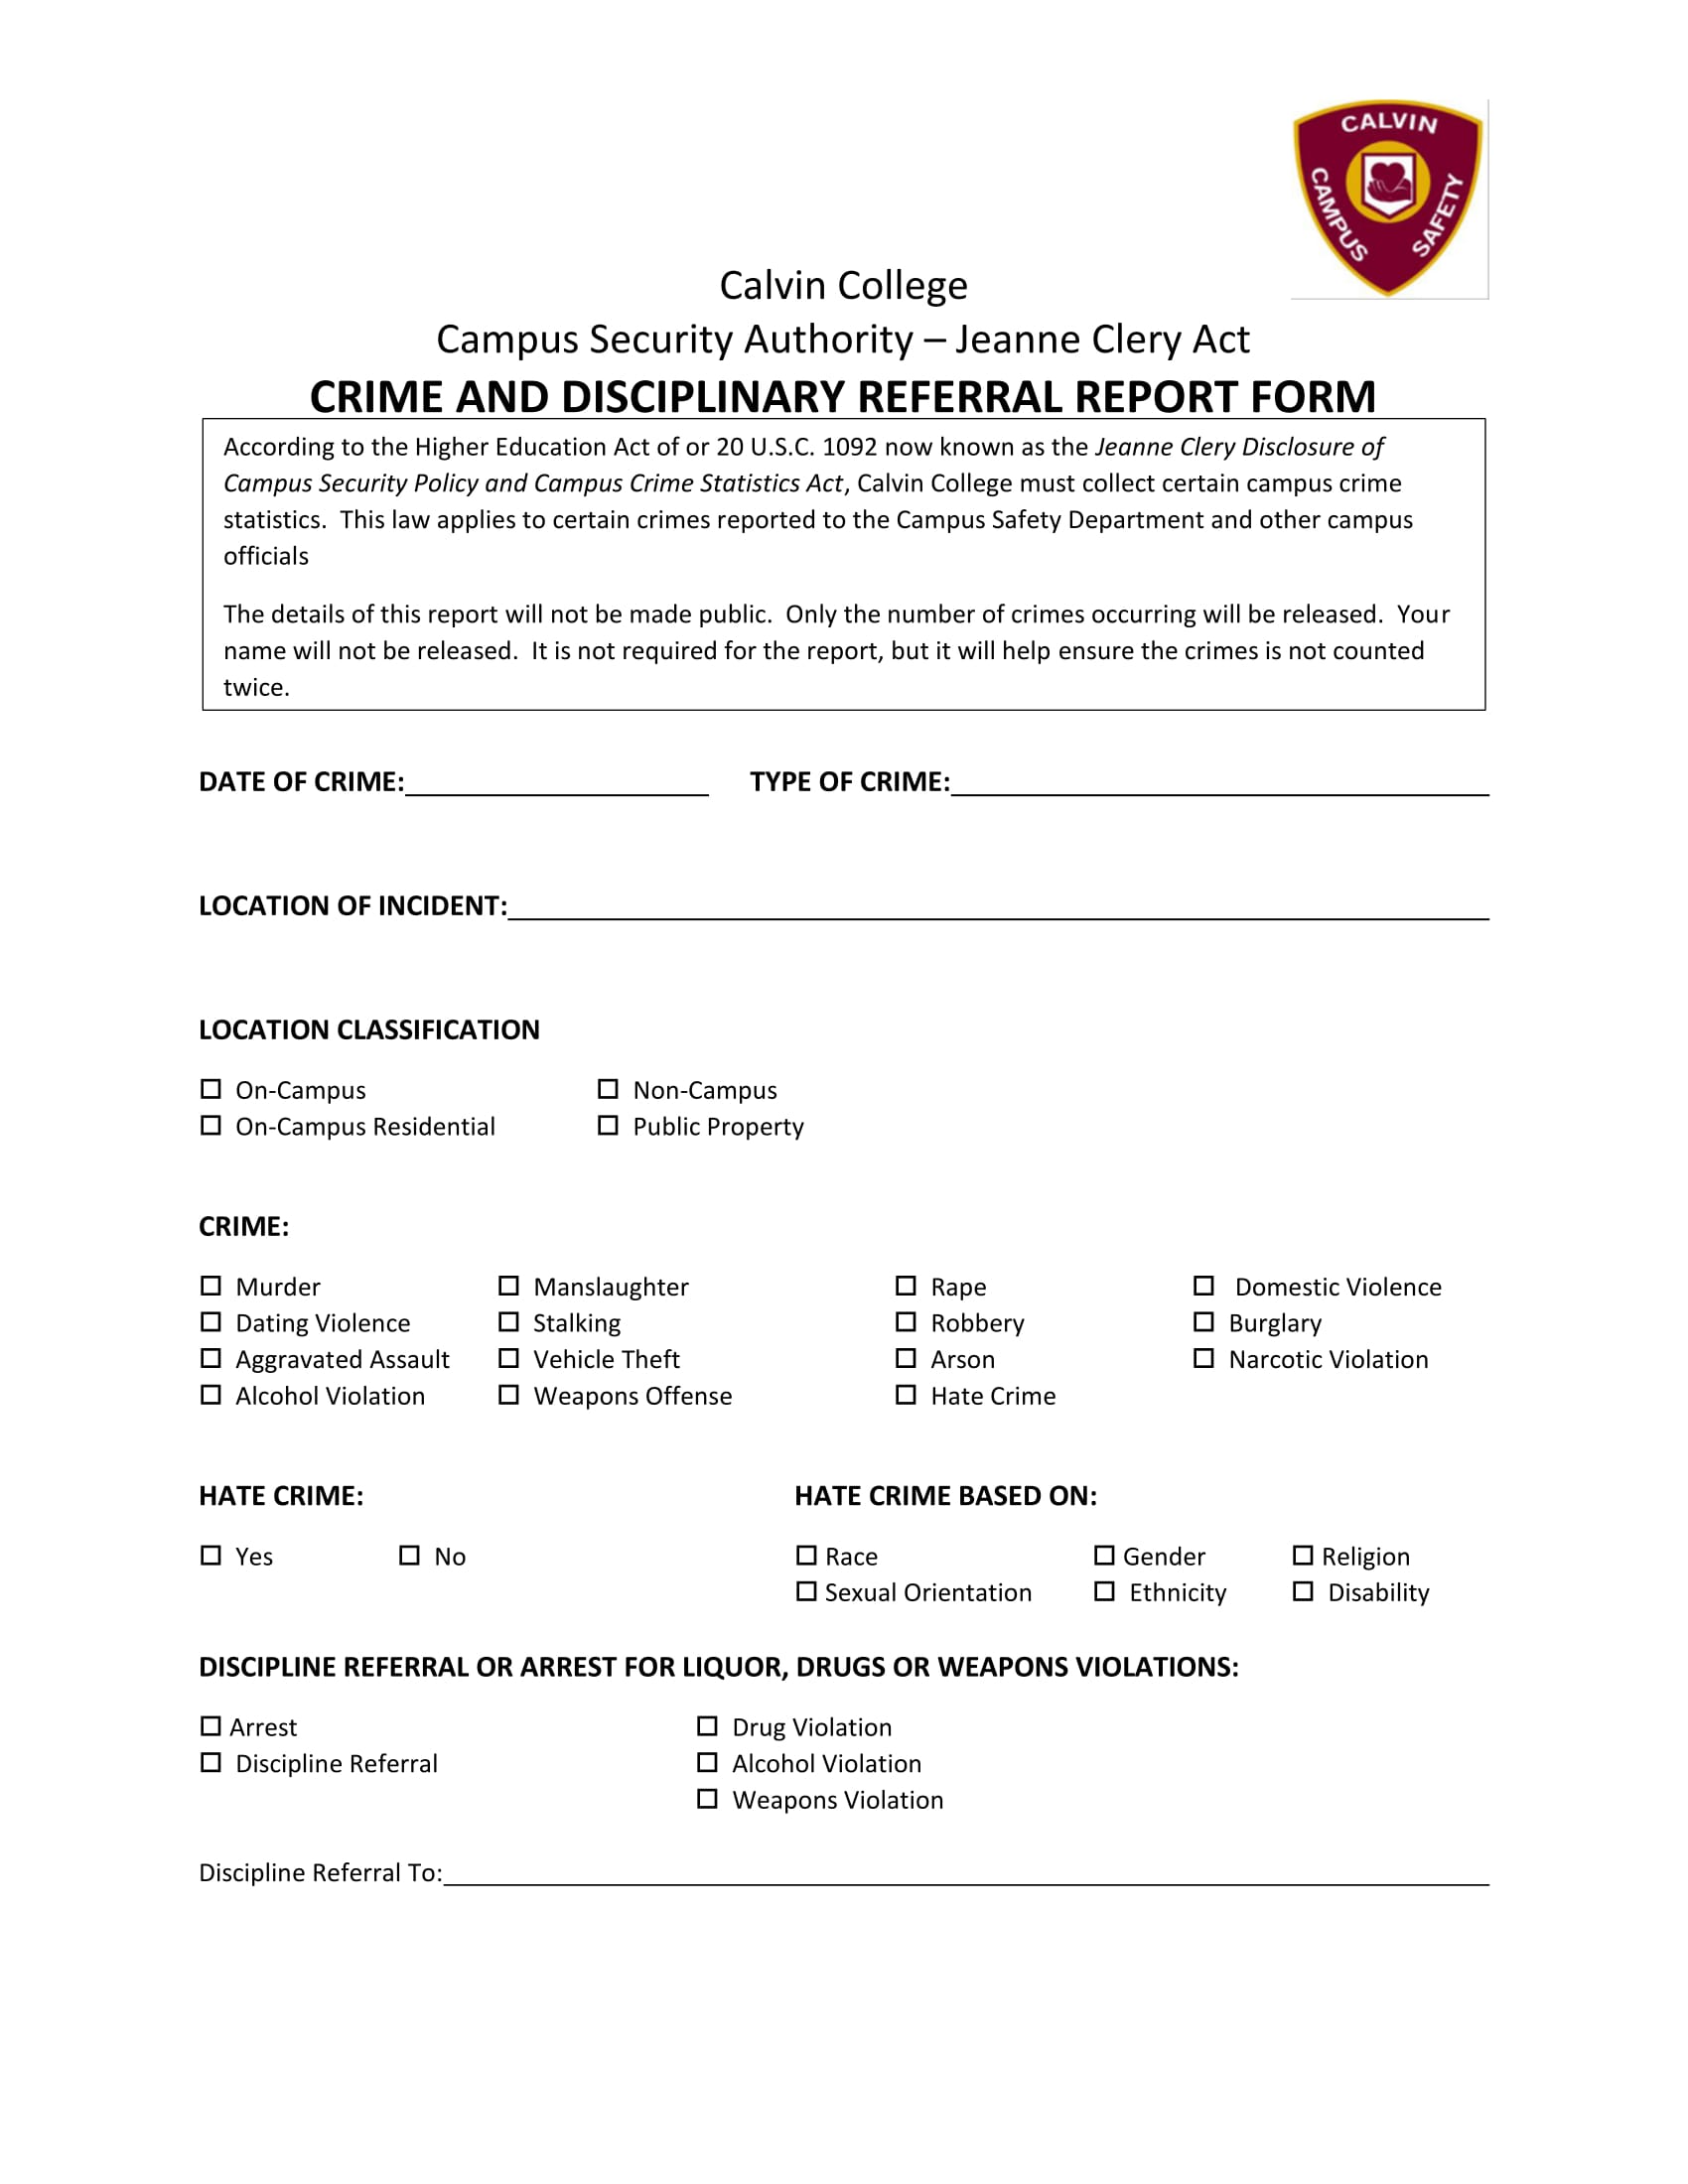 disciplinary referral report form 1